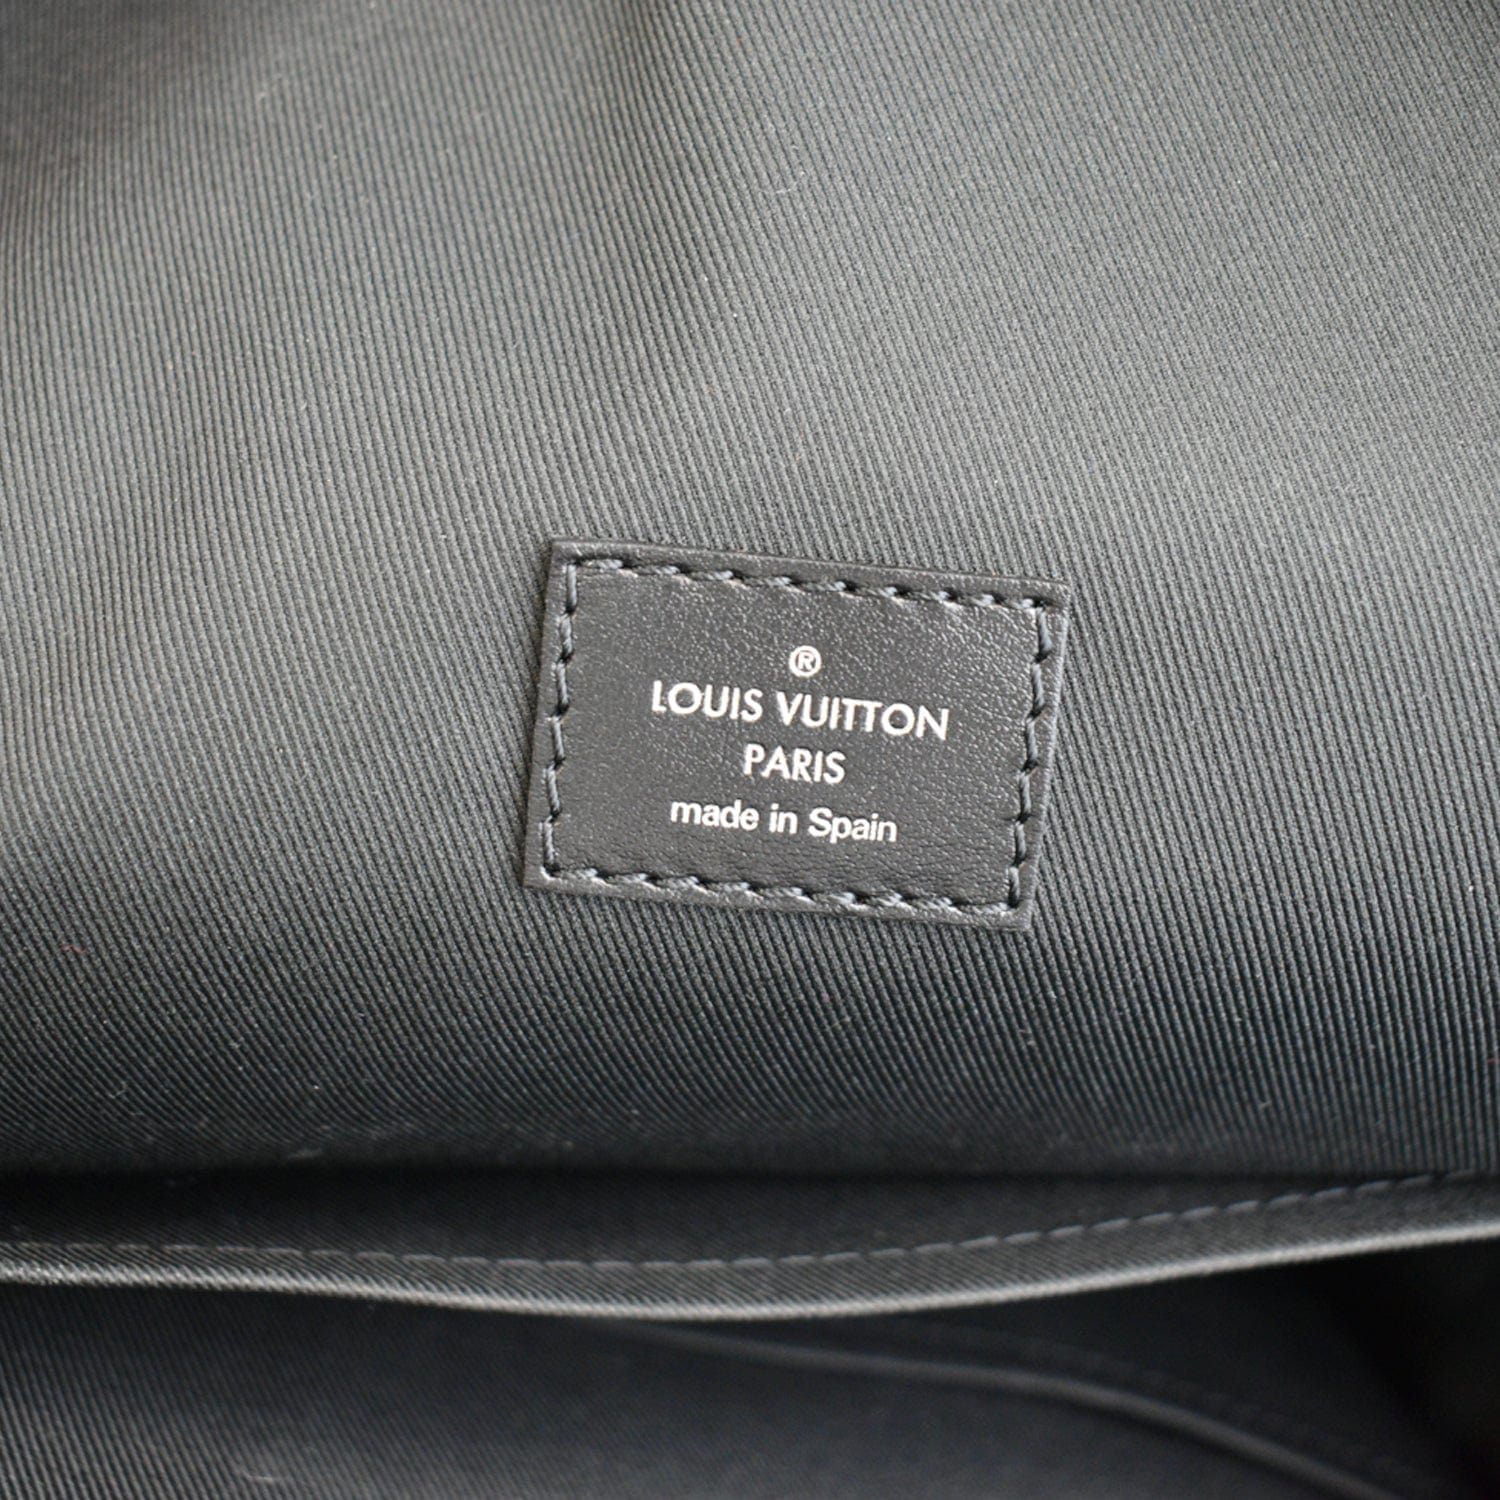 Louis Vuitton Campus Black Backpack